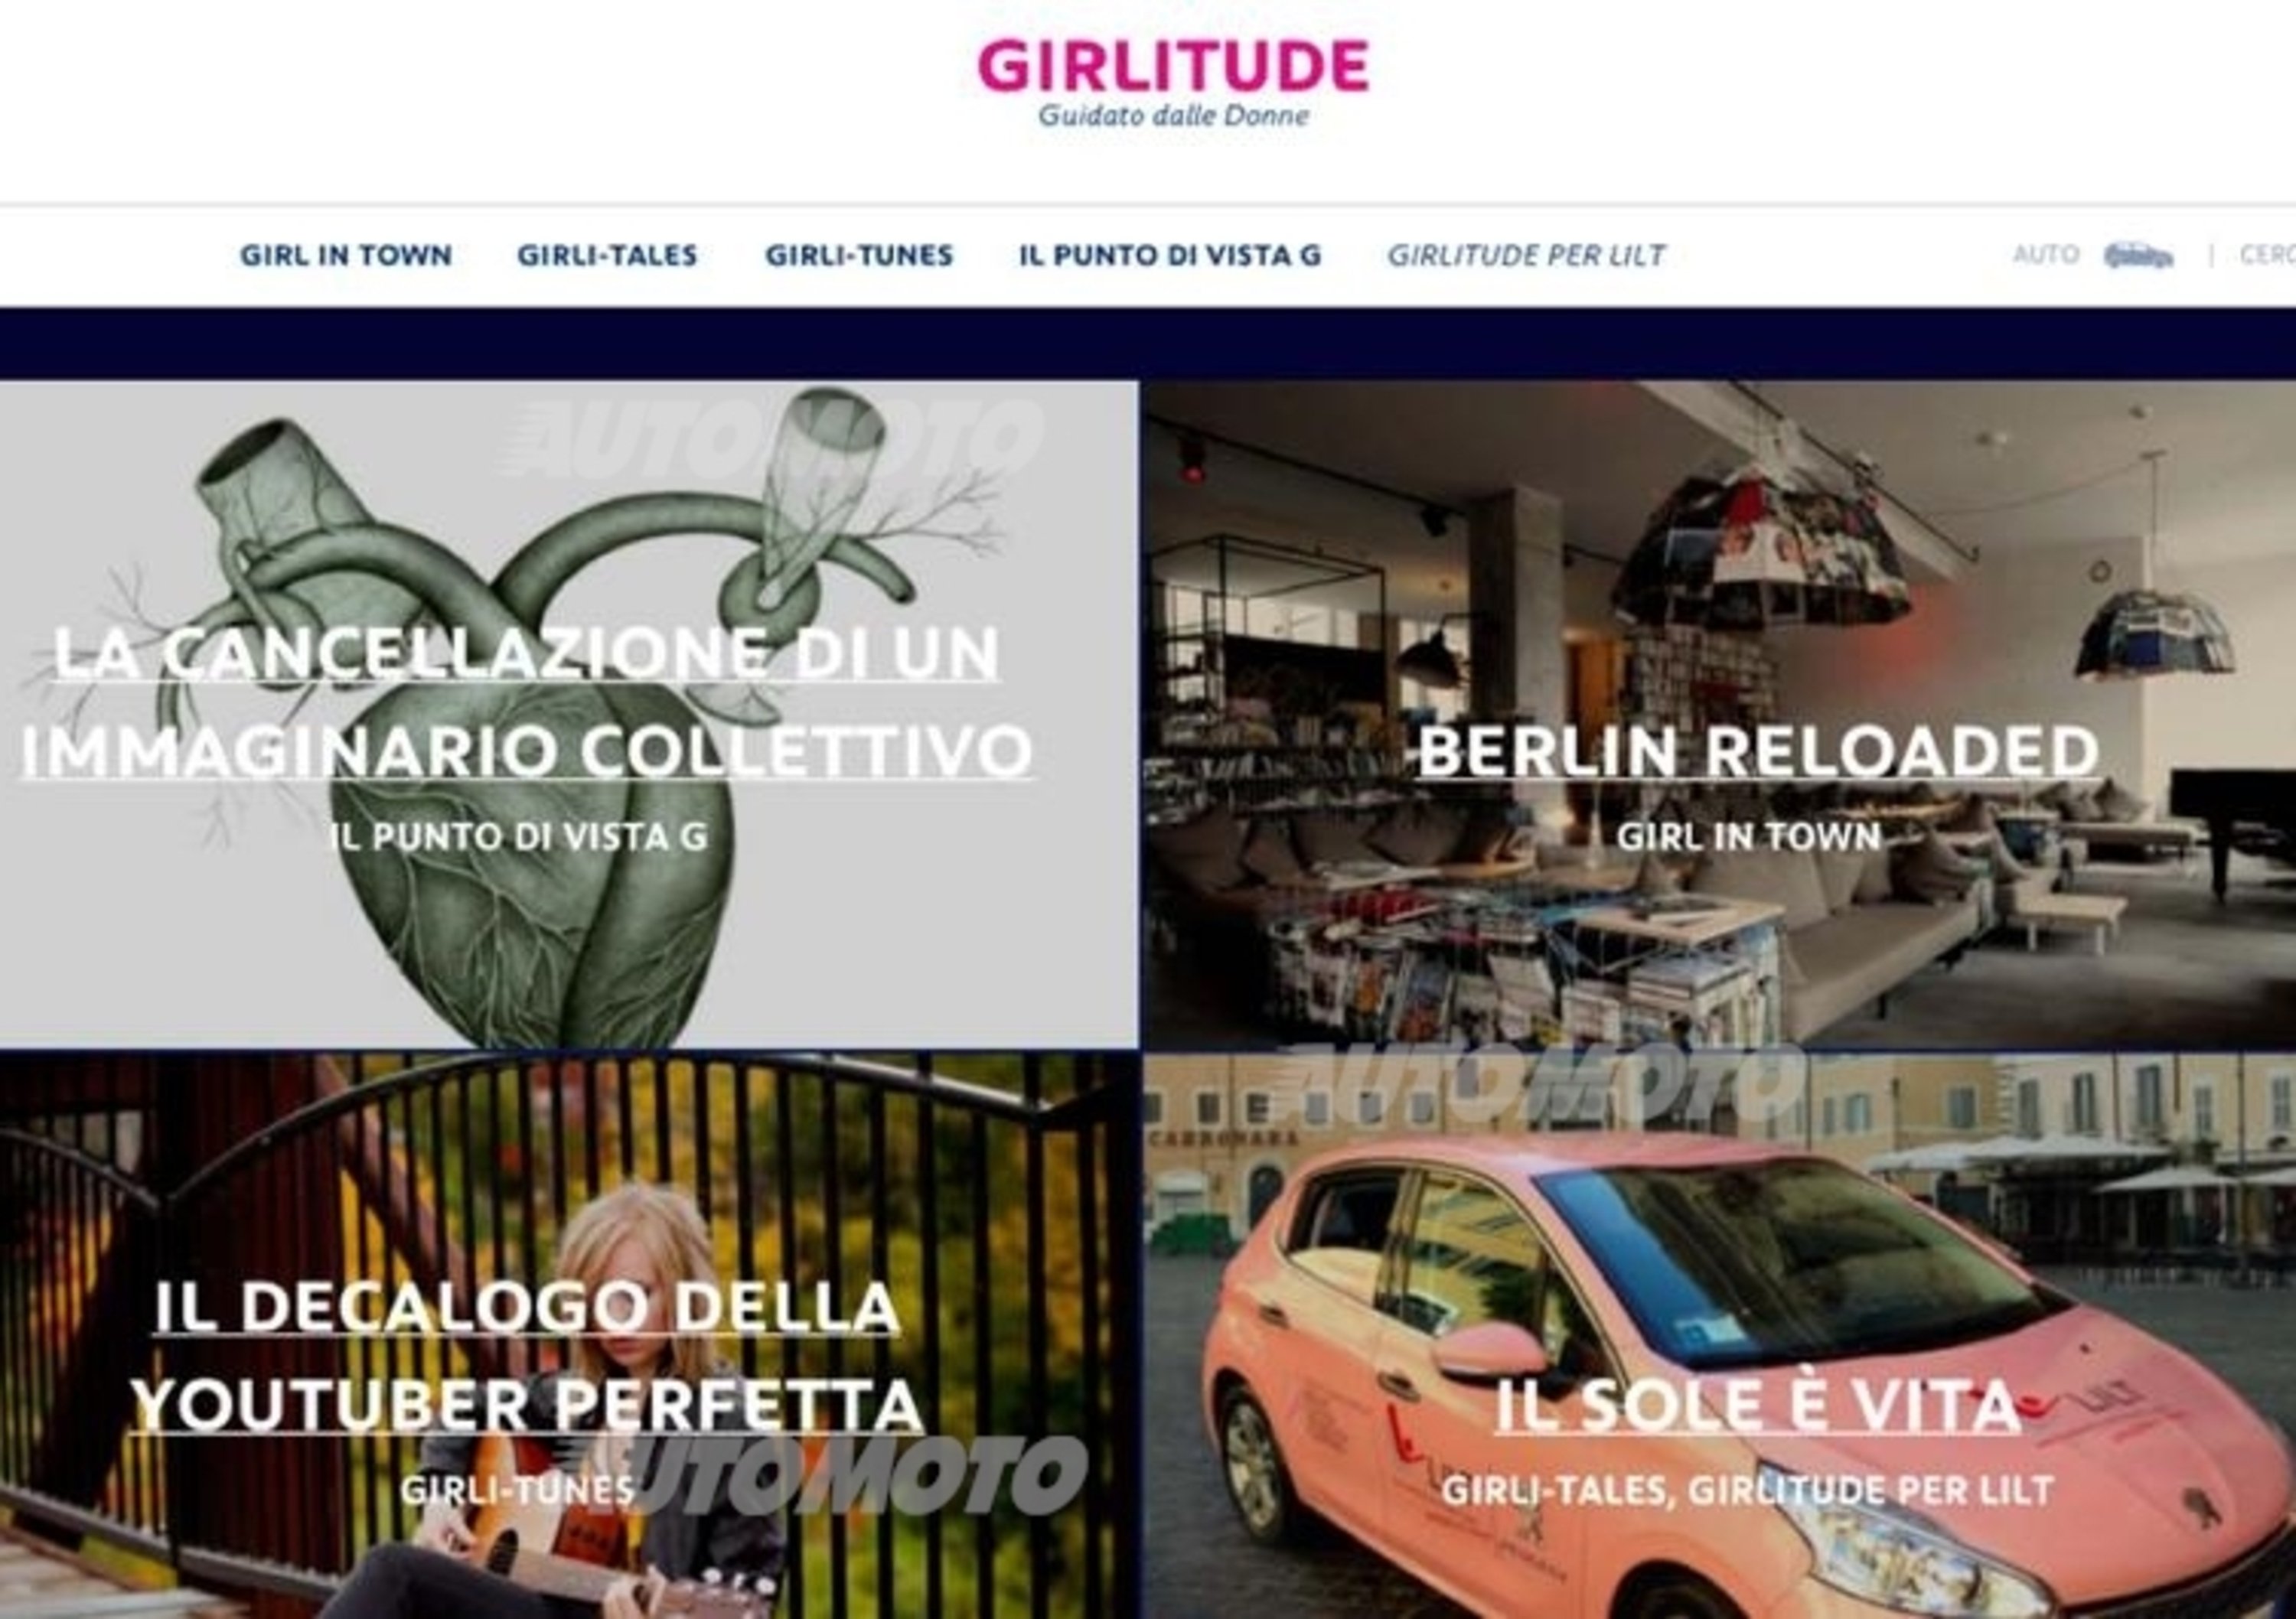 Peugeot presenta Girlitude.it, il &quot;blogazine&quot; tutto al femminile